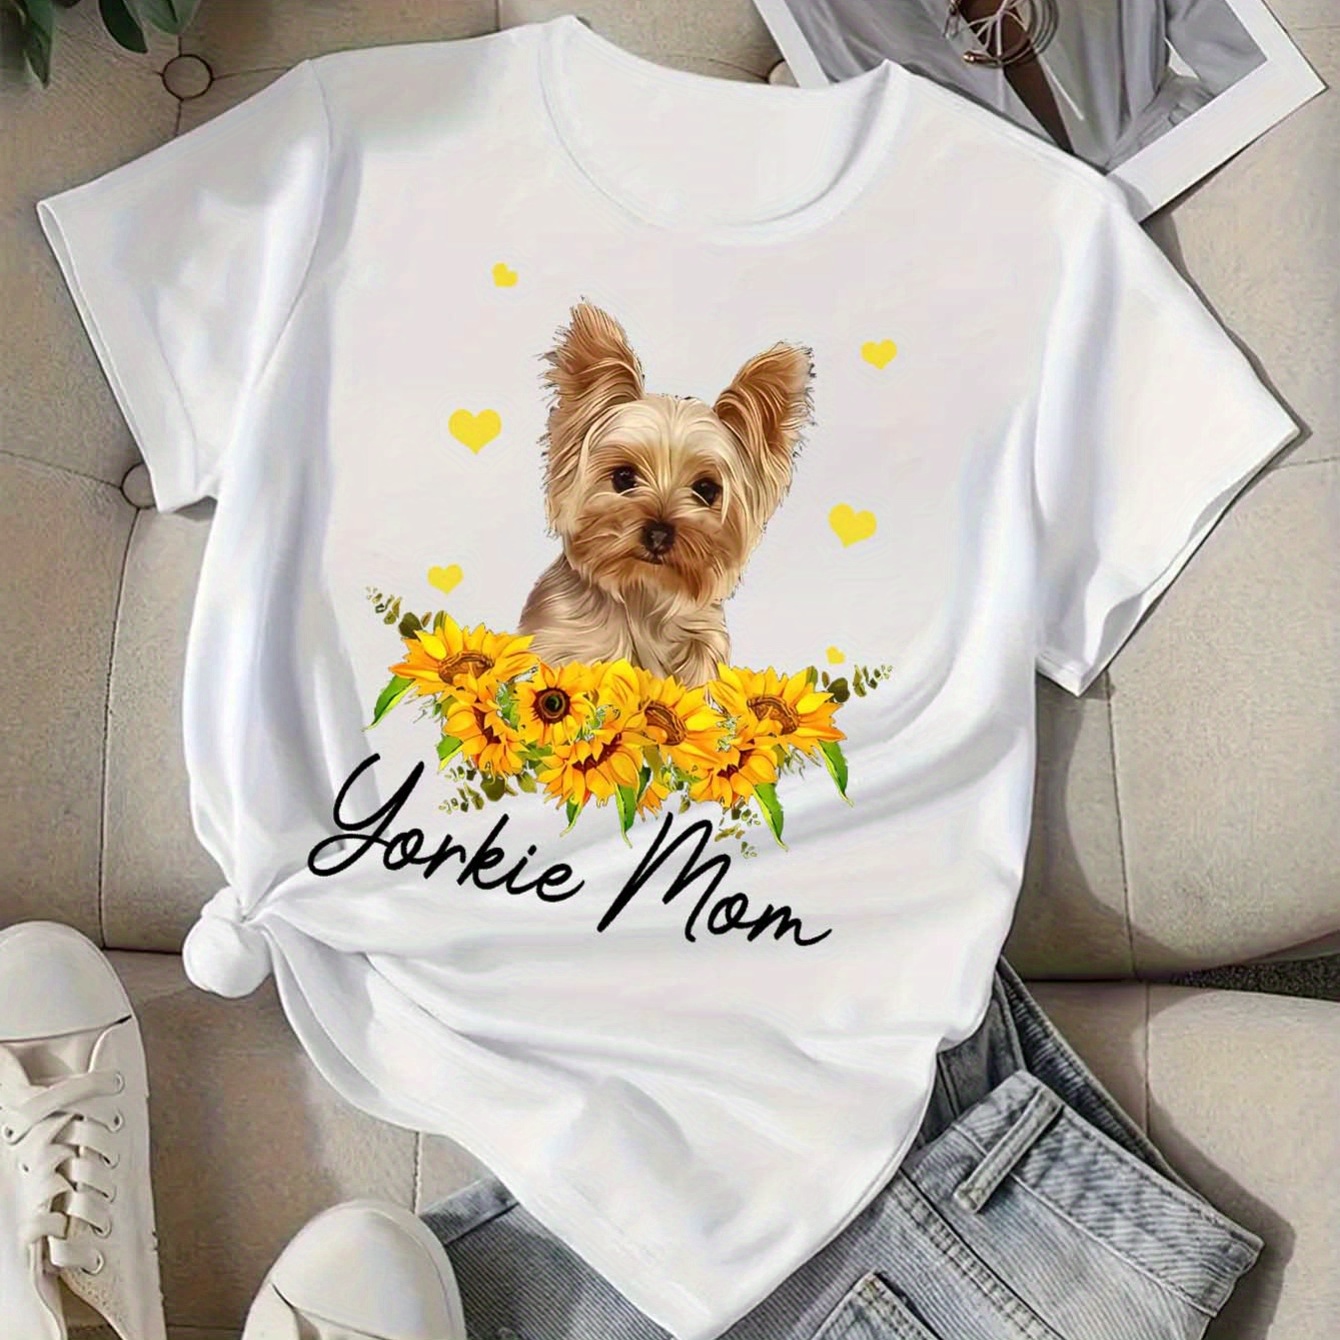 

Dog & Sunflower Print Casual T-shirt, Crew Neck Short Sleeves Comfy Tee, Women's Sports Tops